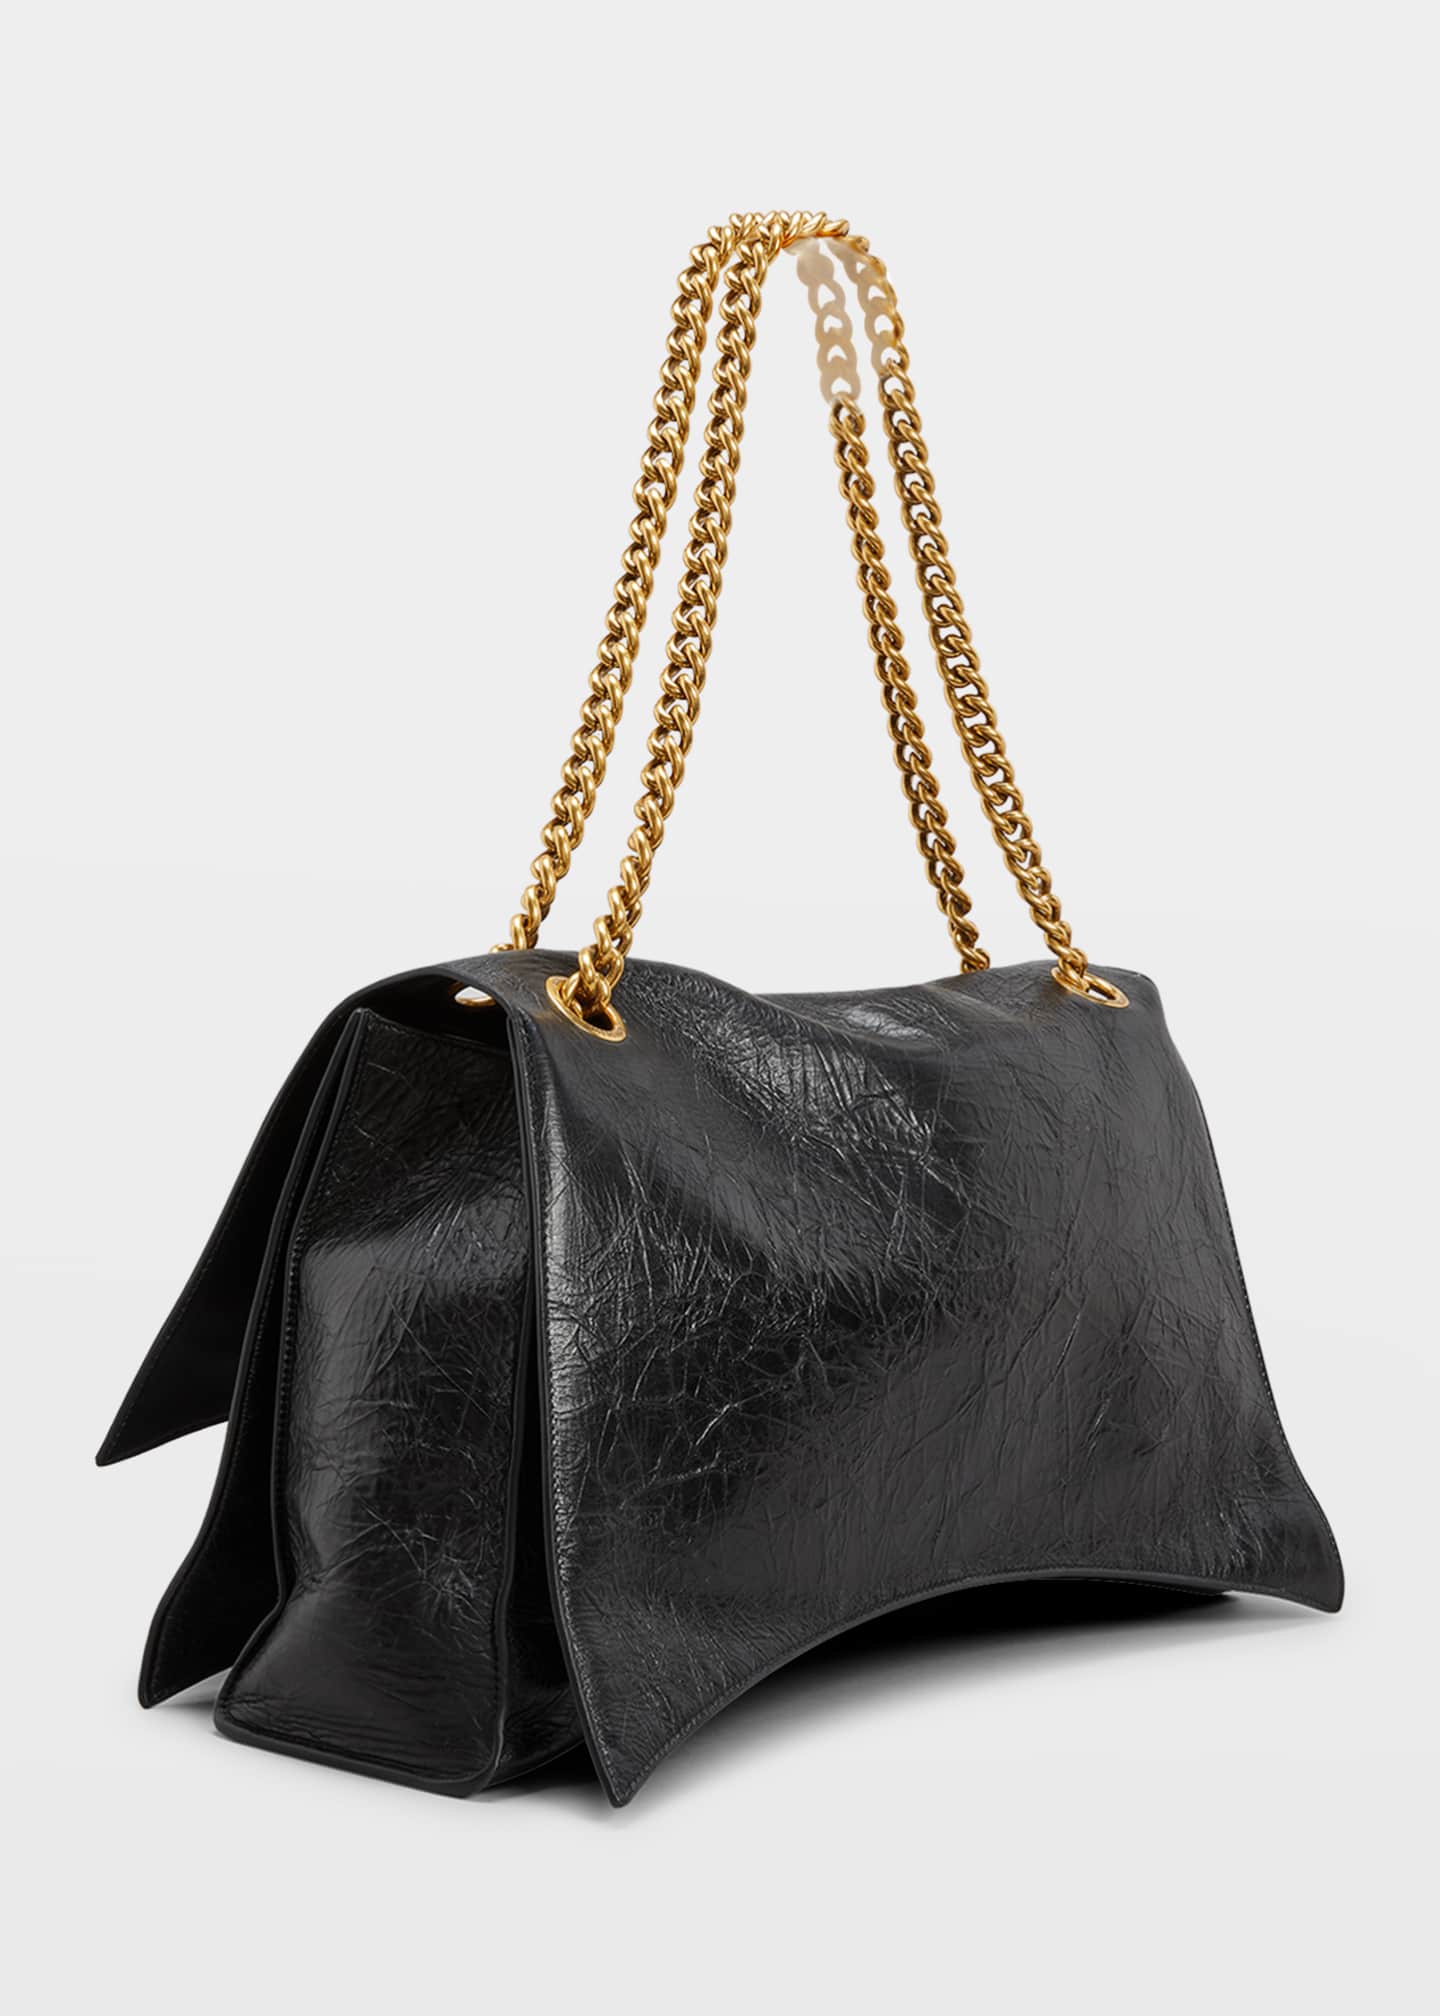 Black Crush creased-leather tote bag, Balenciaga